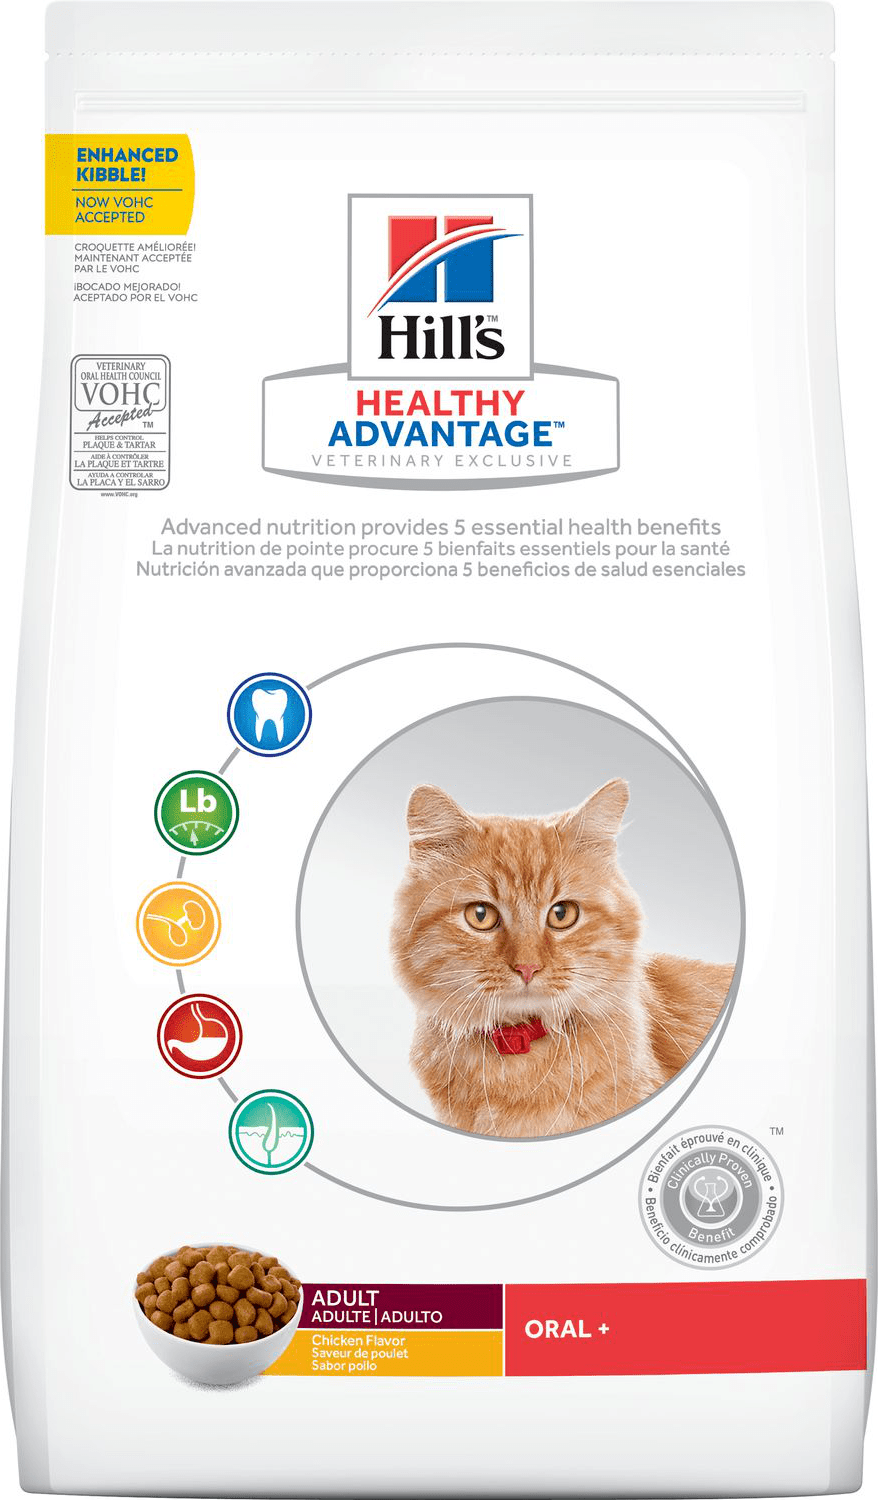 Hill's Healthy Advantage Adult Oral+ Feline Nutrition